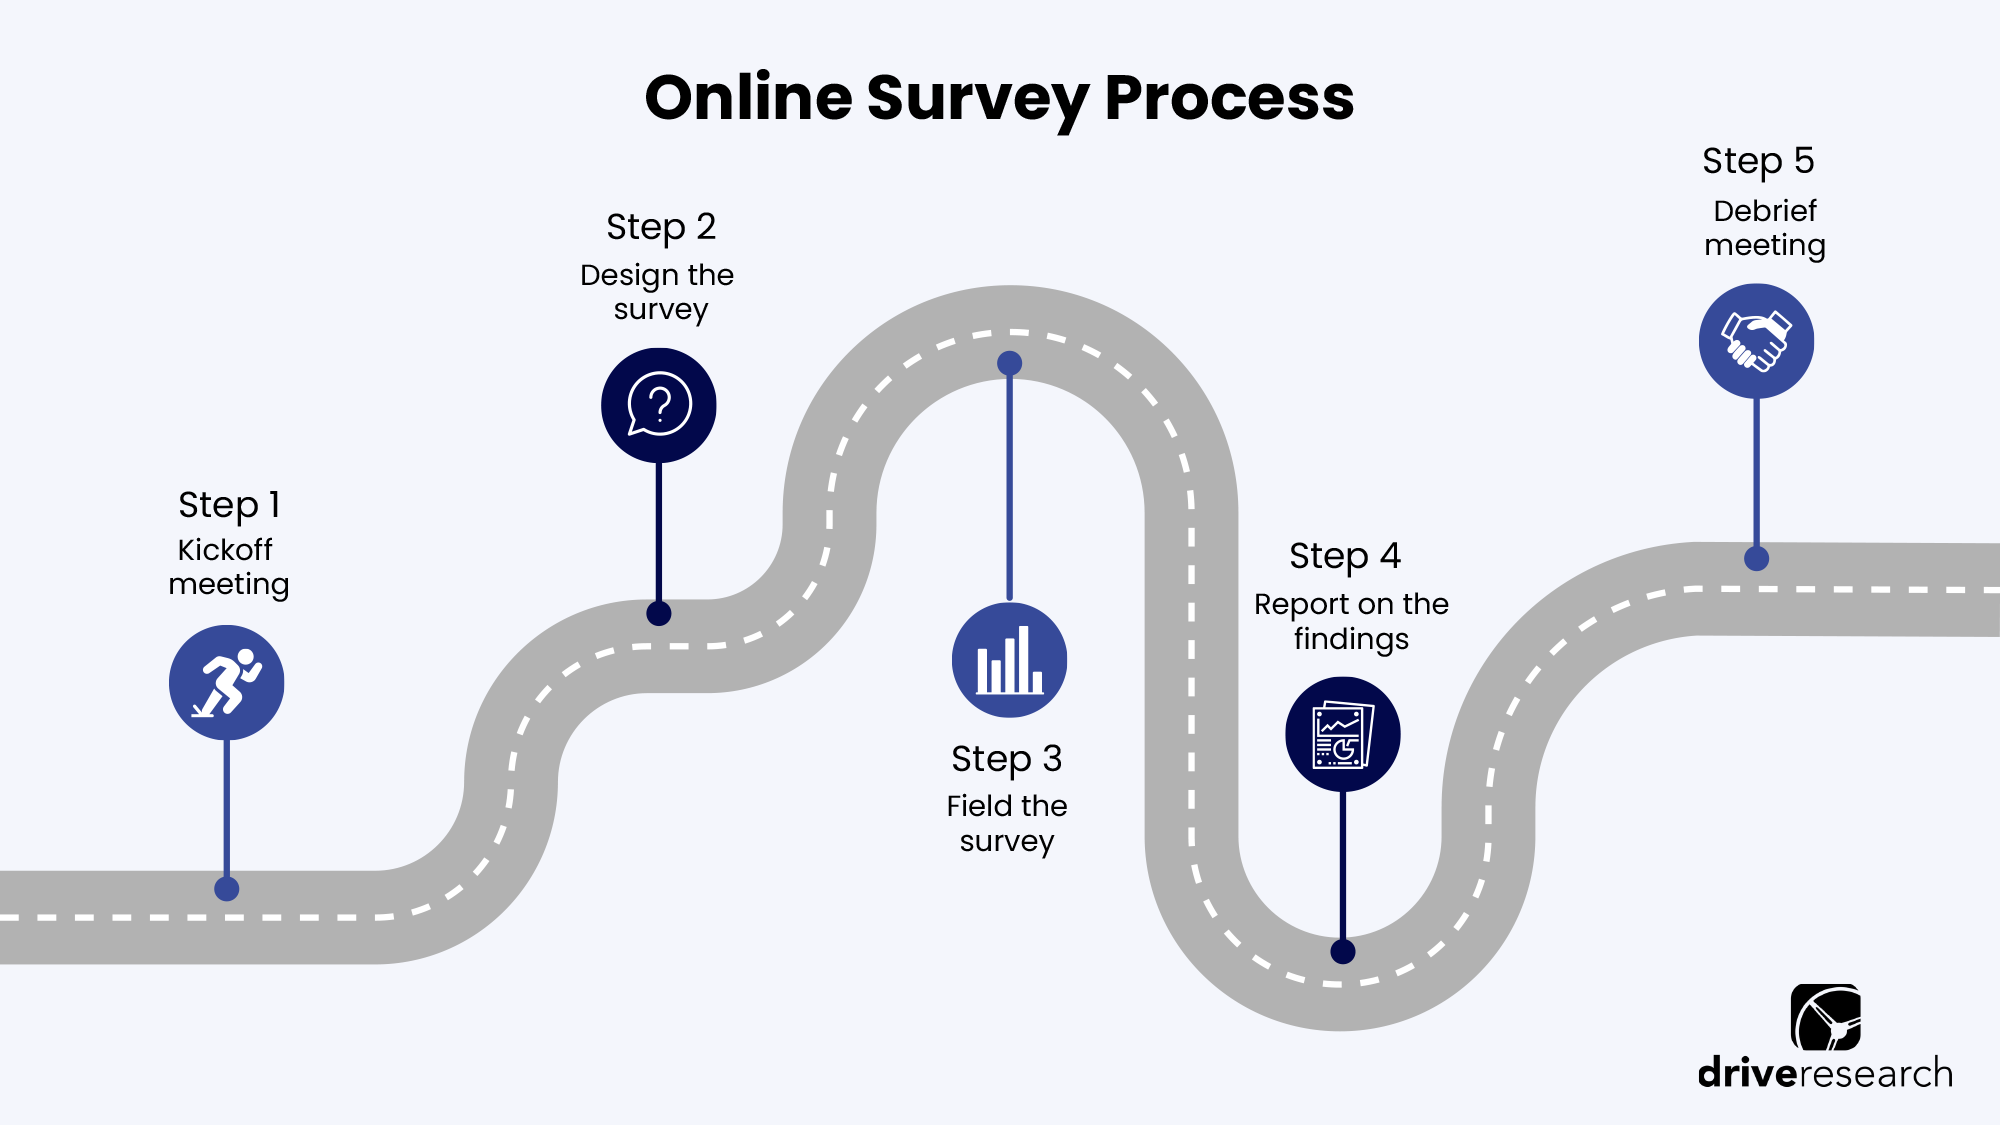 Online survey steps